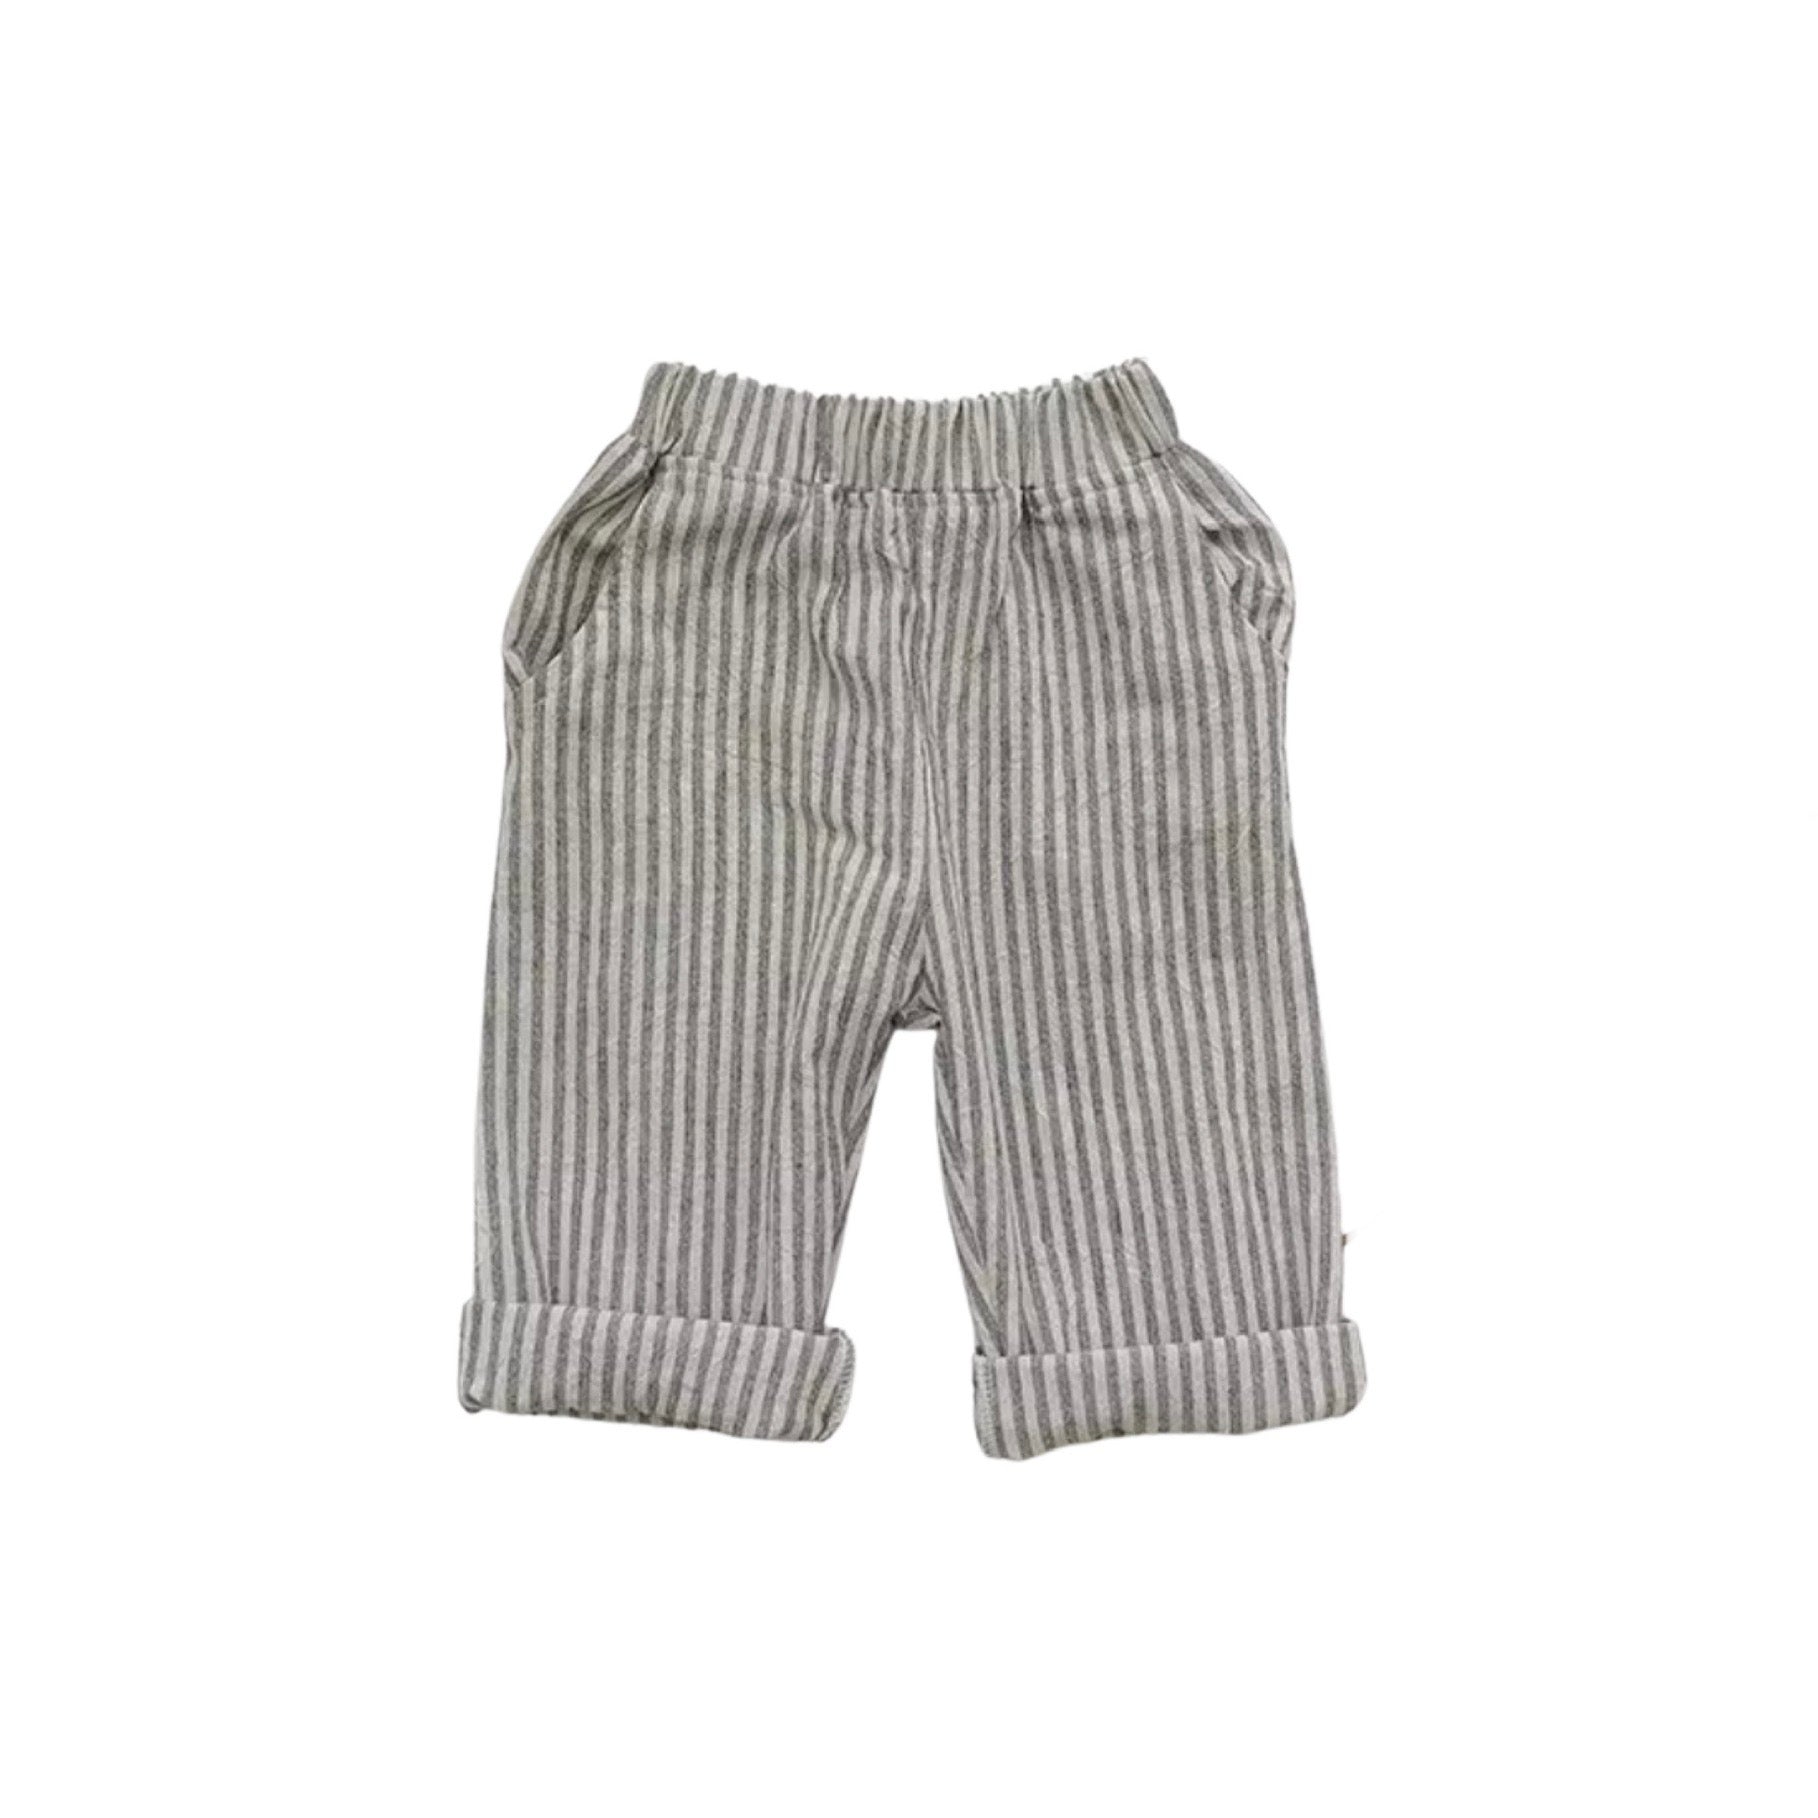 Linen Baby Pants - Grey Stripes.